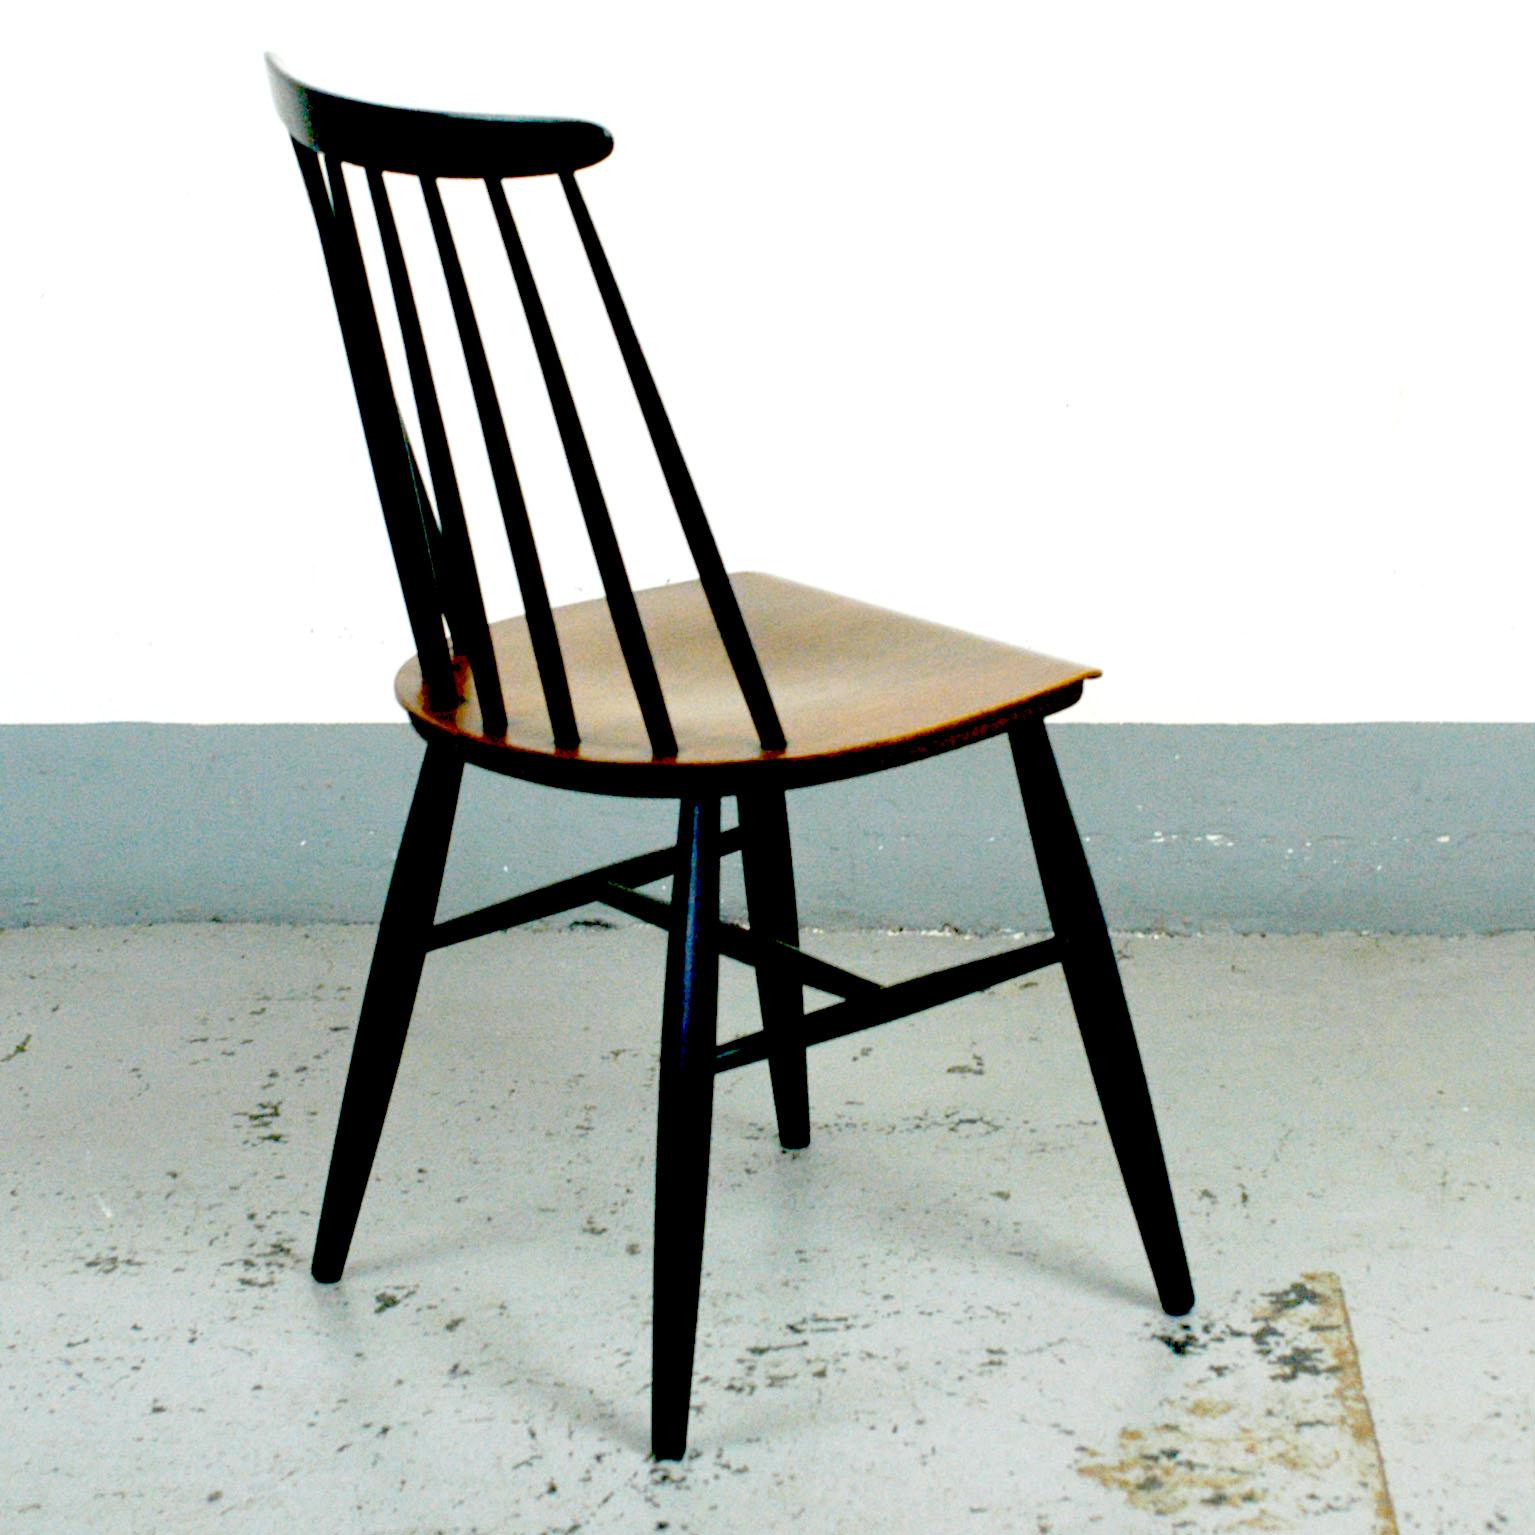 Swedish Set of 6 Scandinavian Modern Teak and Black Dining Chairs by Ilmari Tapiovaara